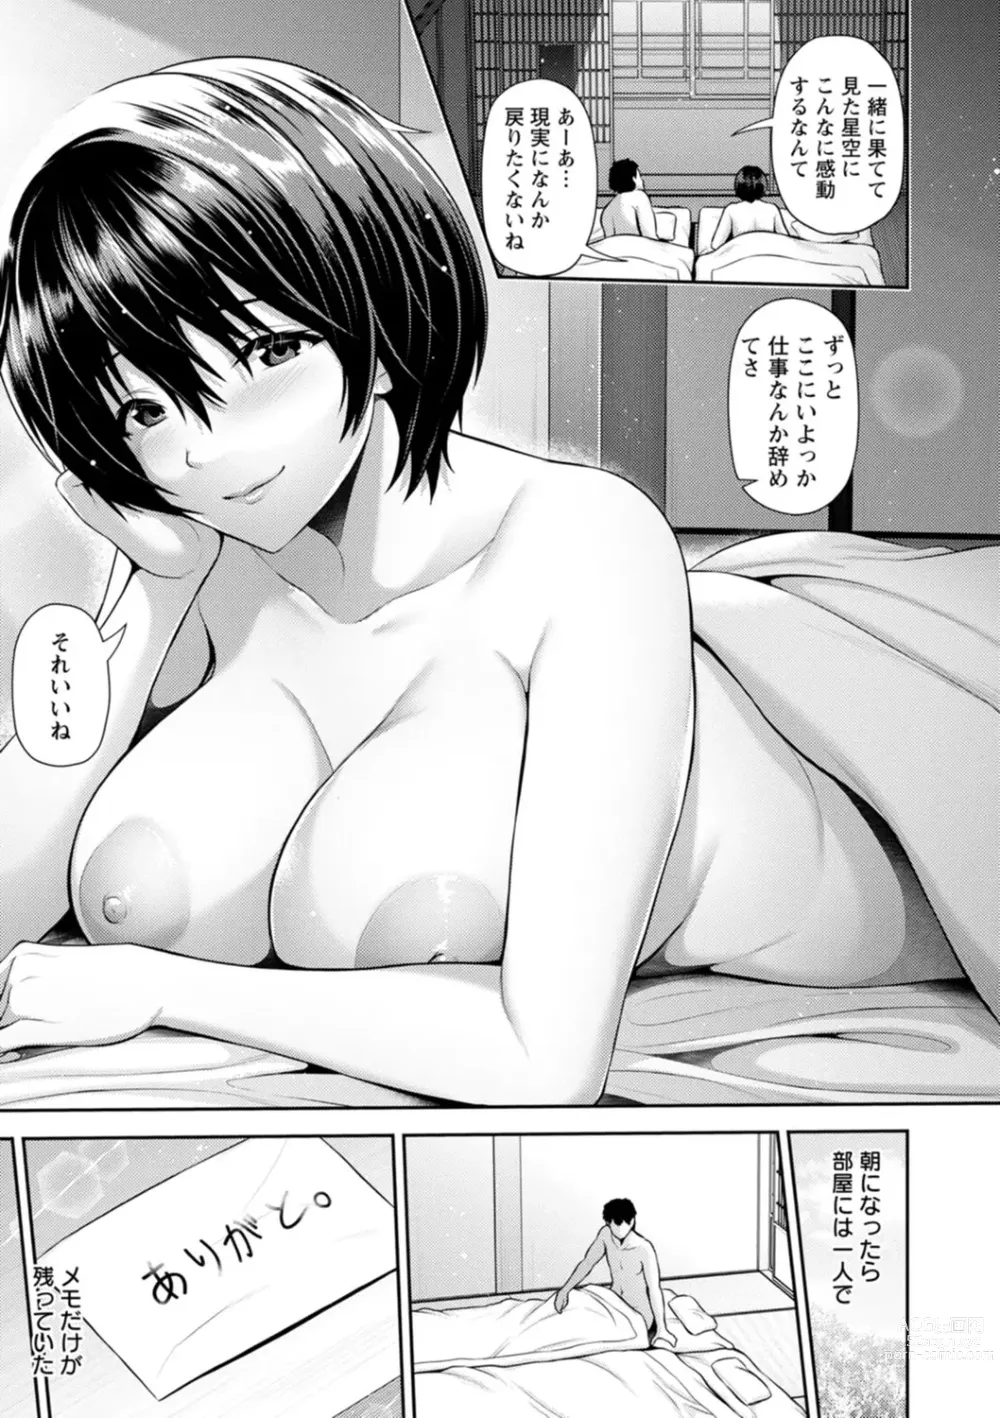 Page 179 of manga Furin Ryokou - Immorality travels